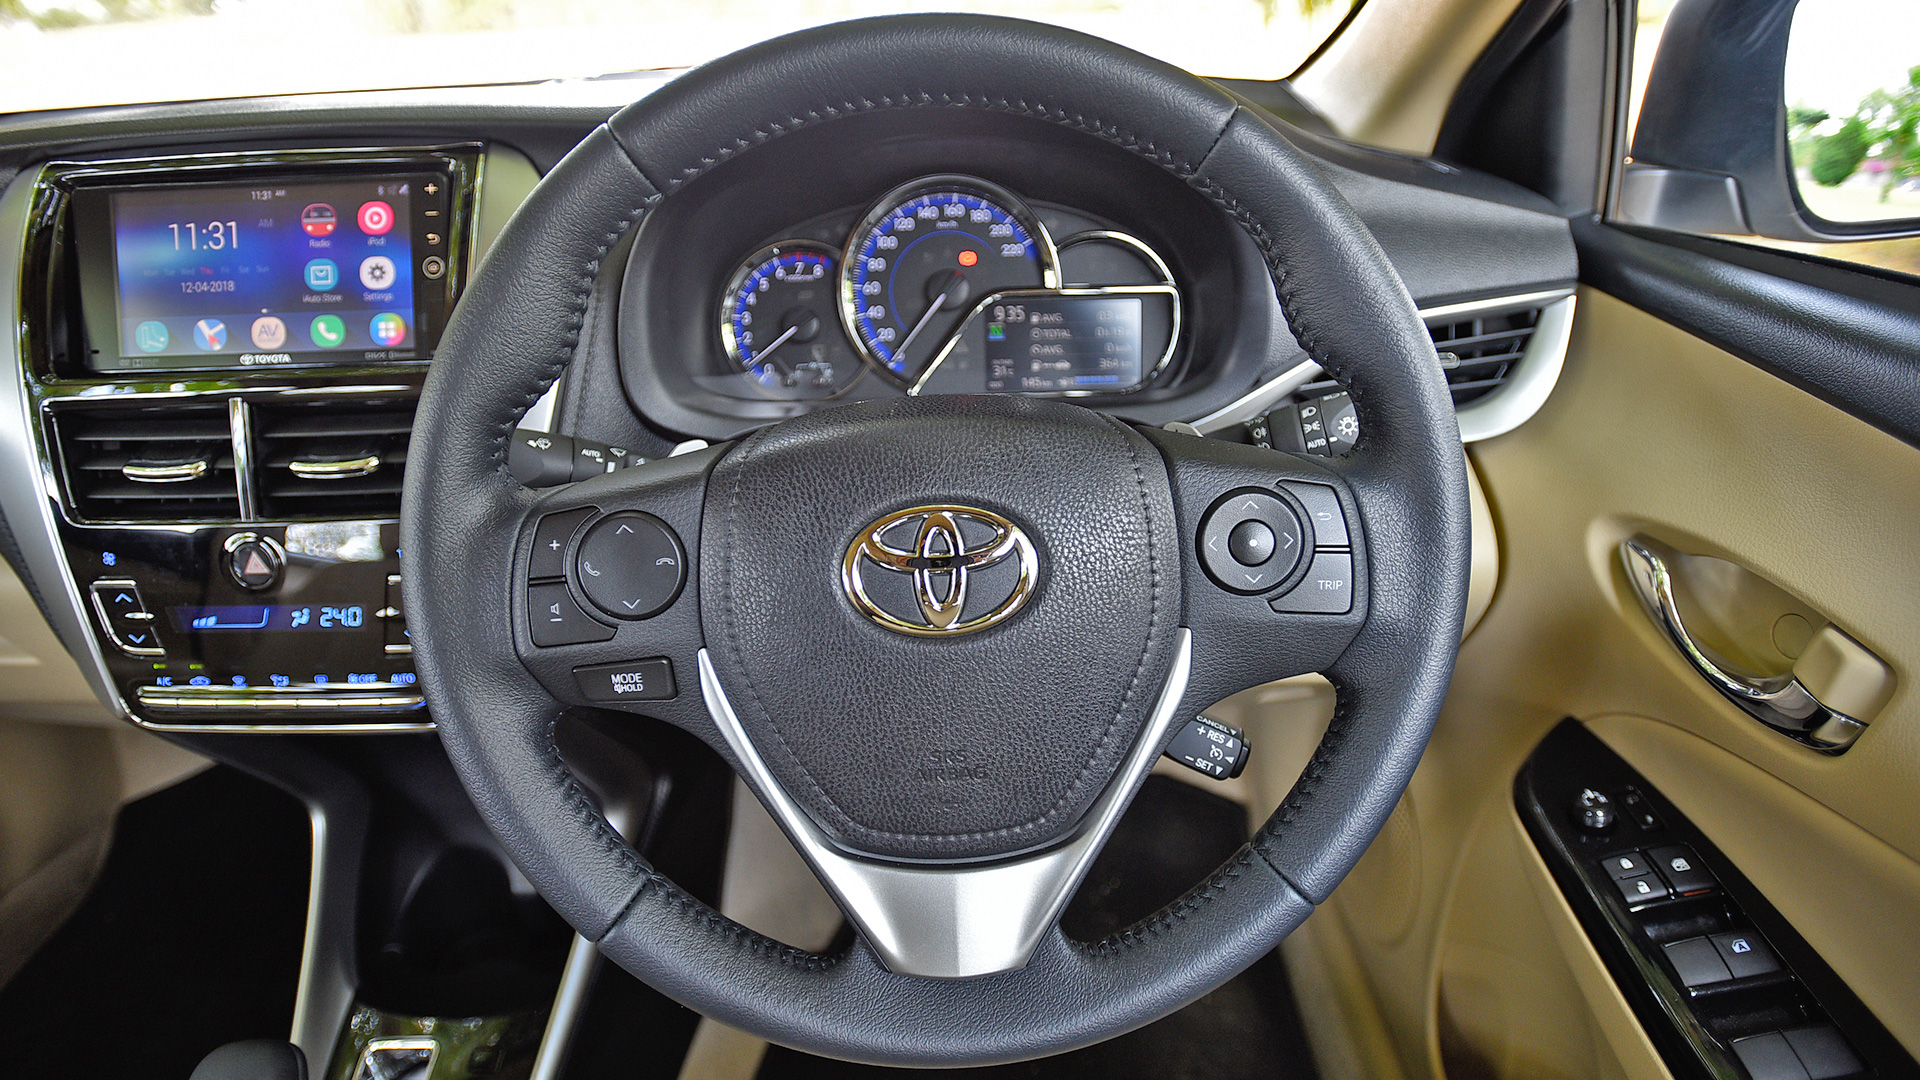 Toyota Yaris 2018 VX CVT Interior